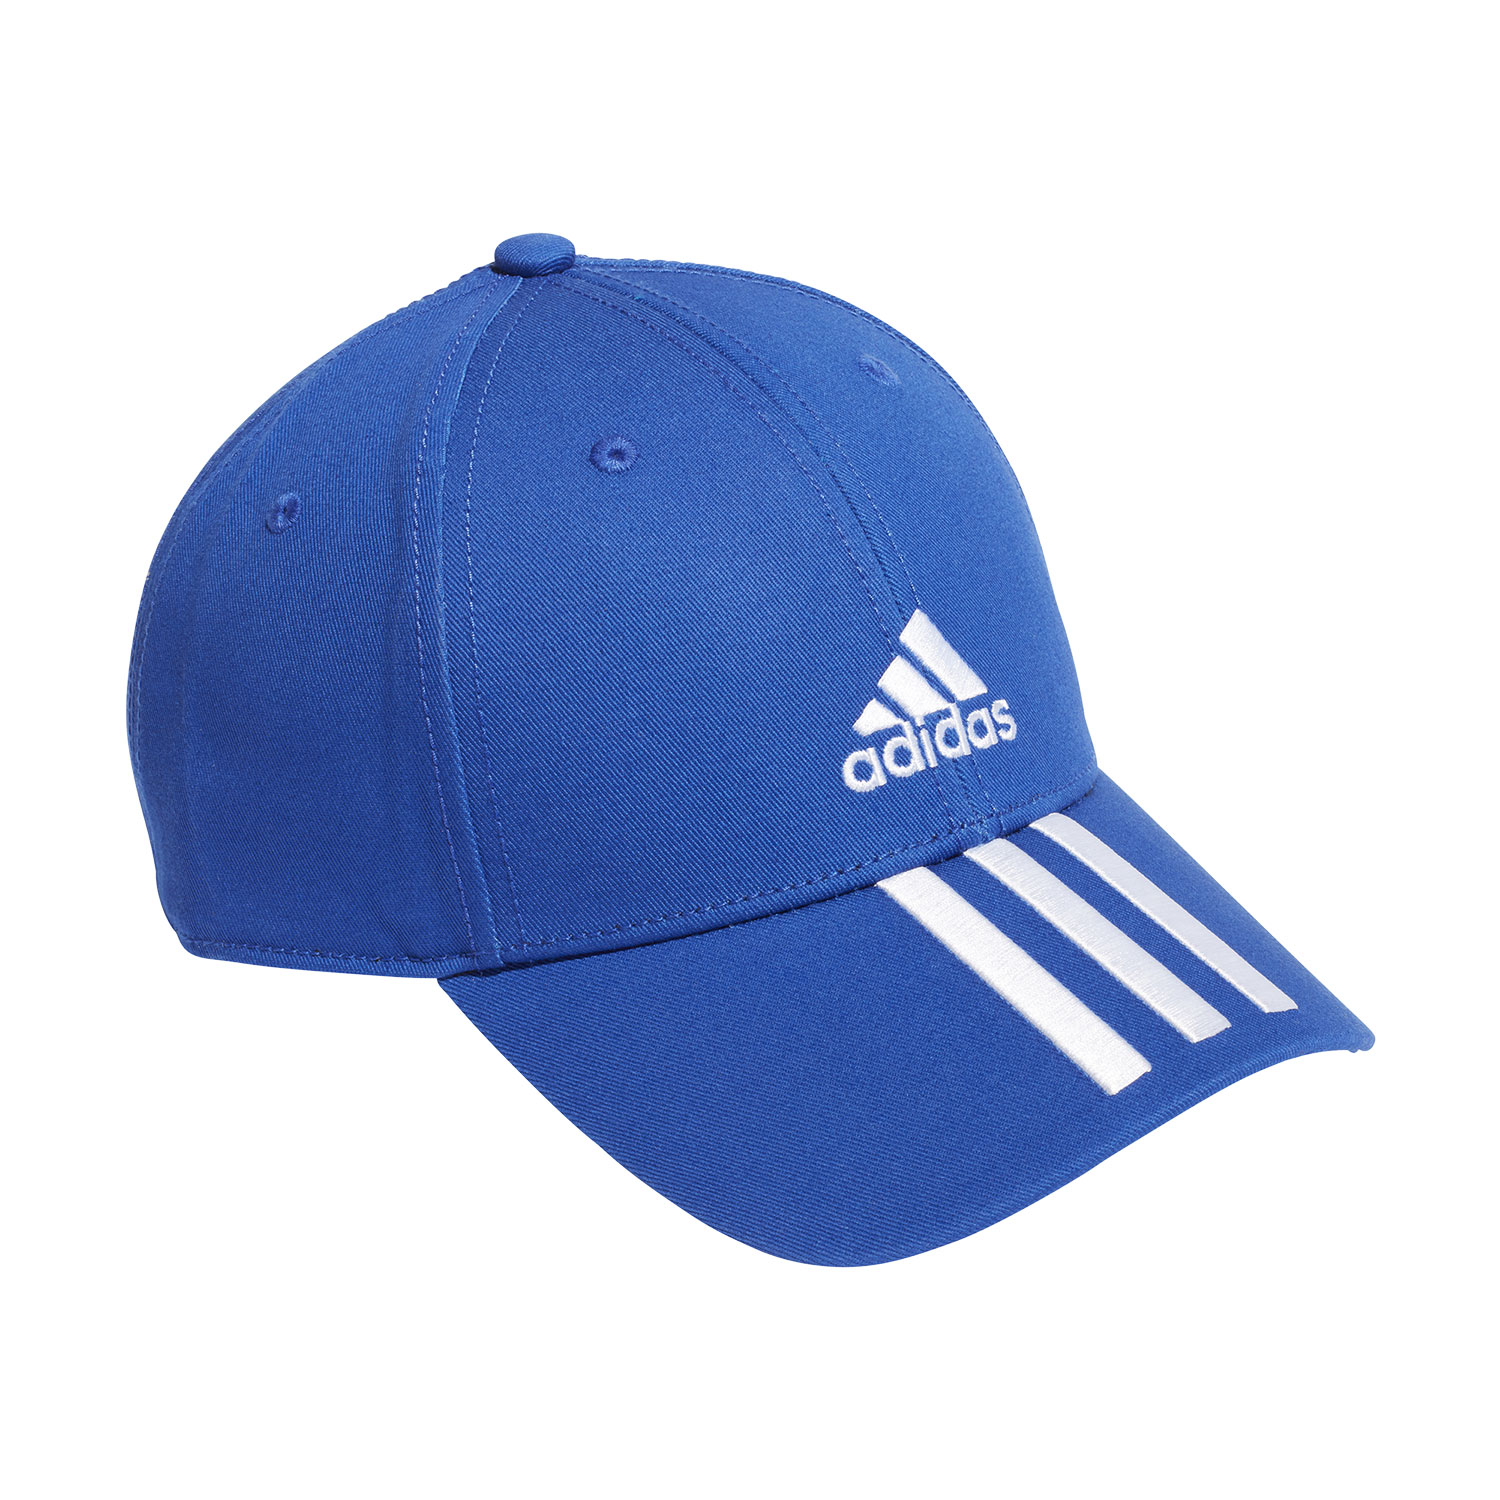 Adidas Baseball 3 Stripes Cap - Bold Blue/White